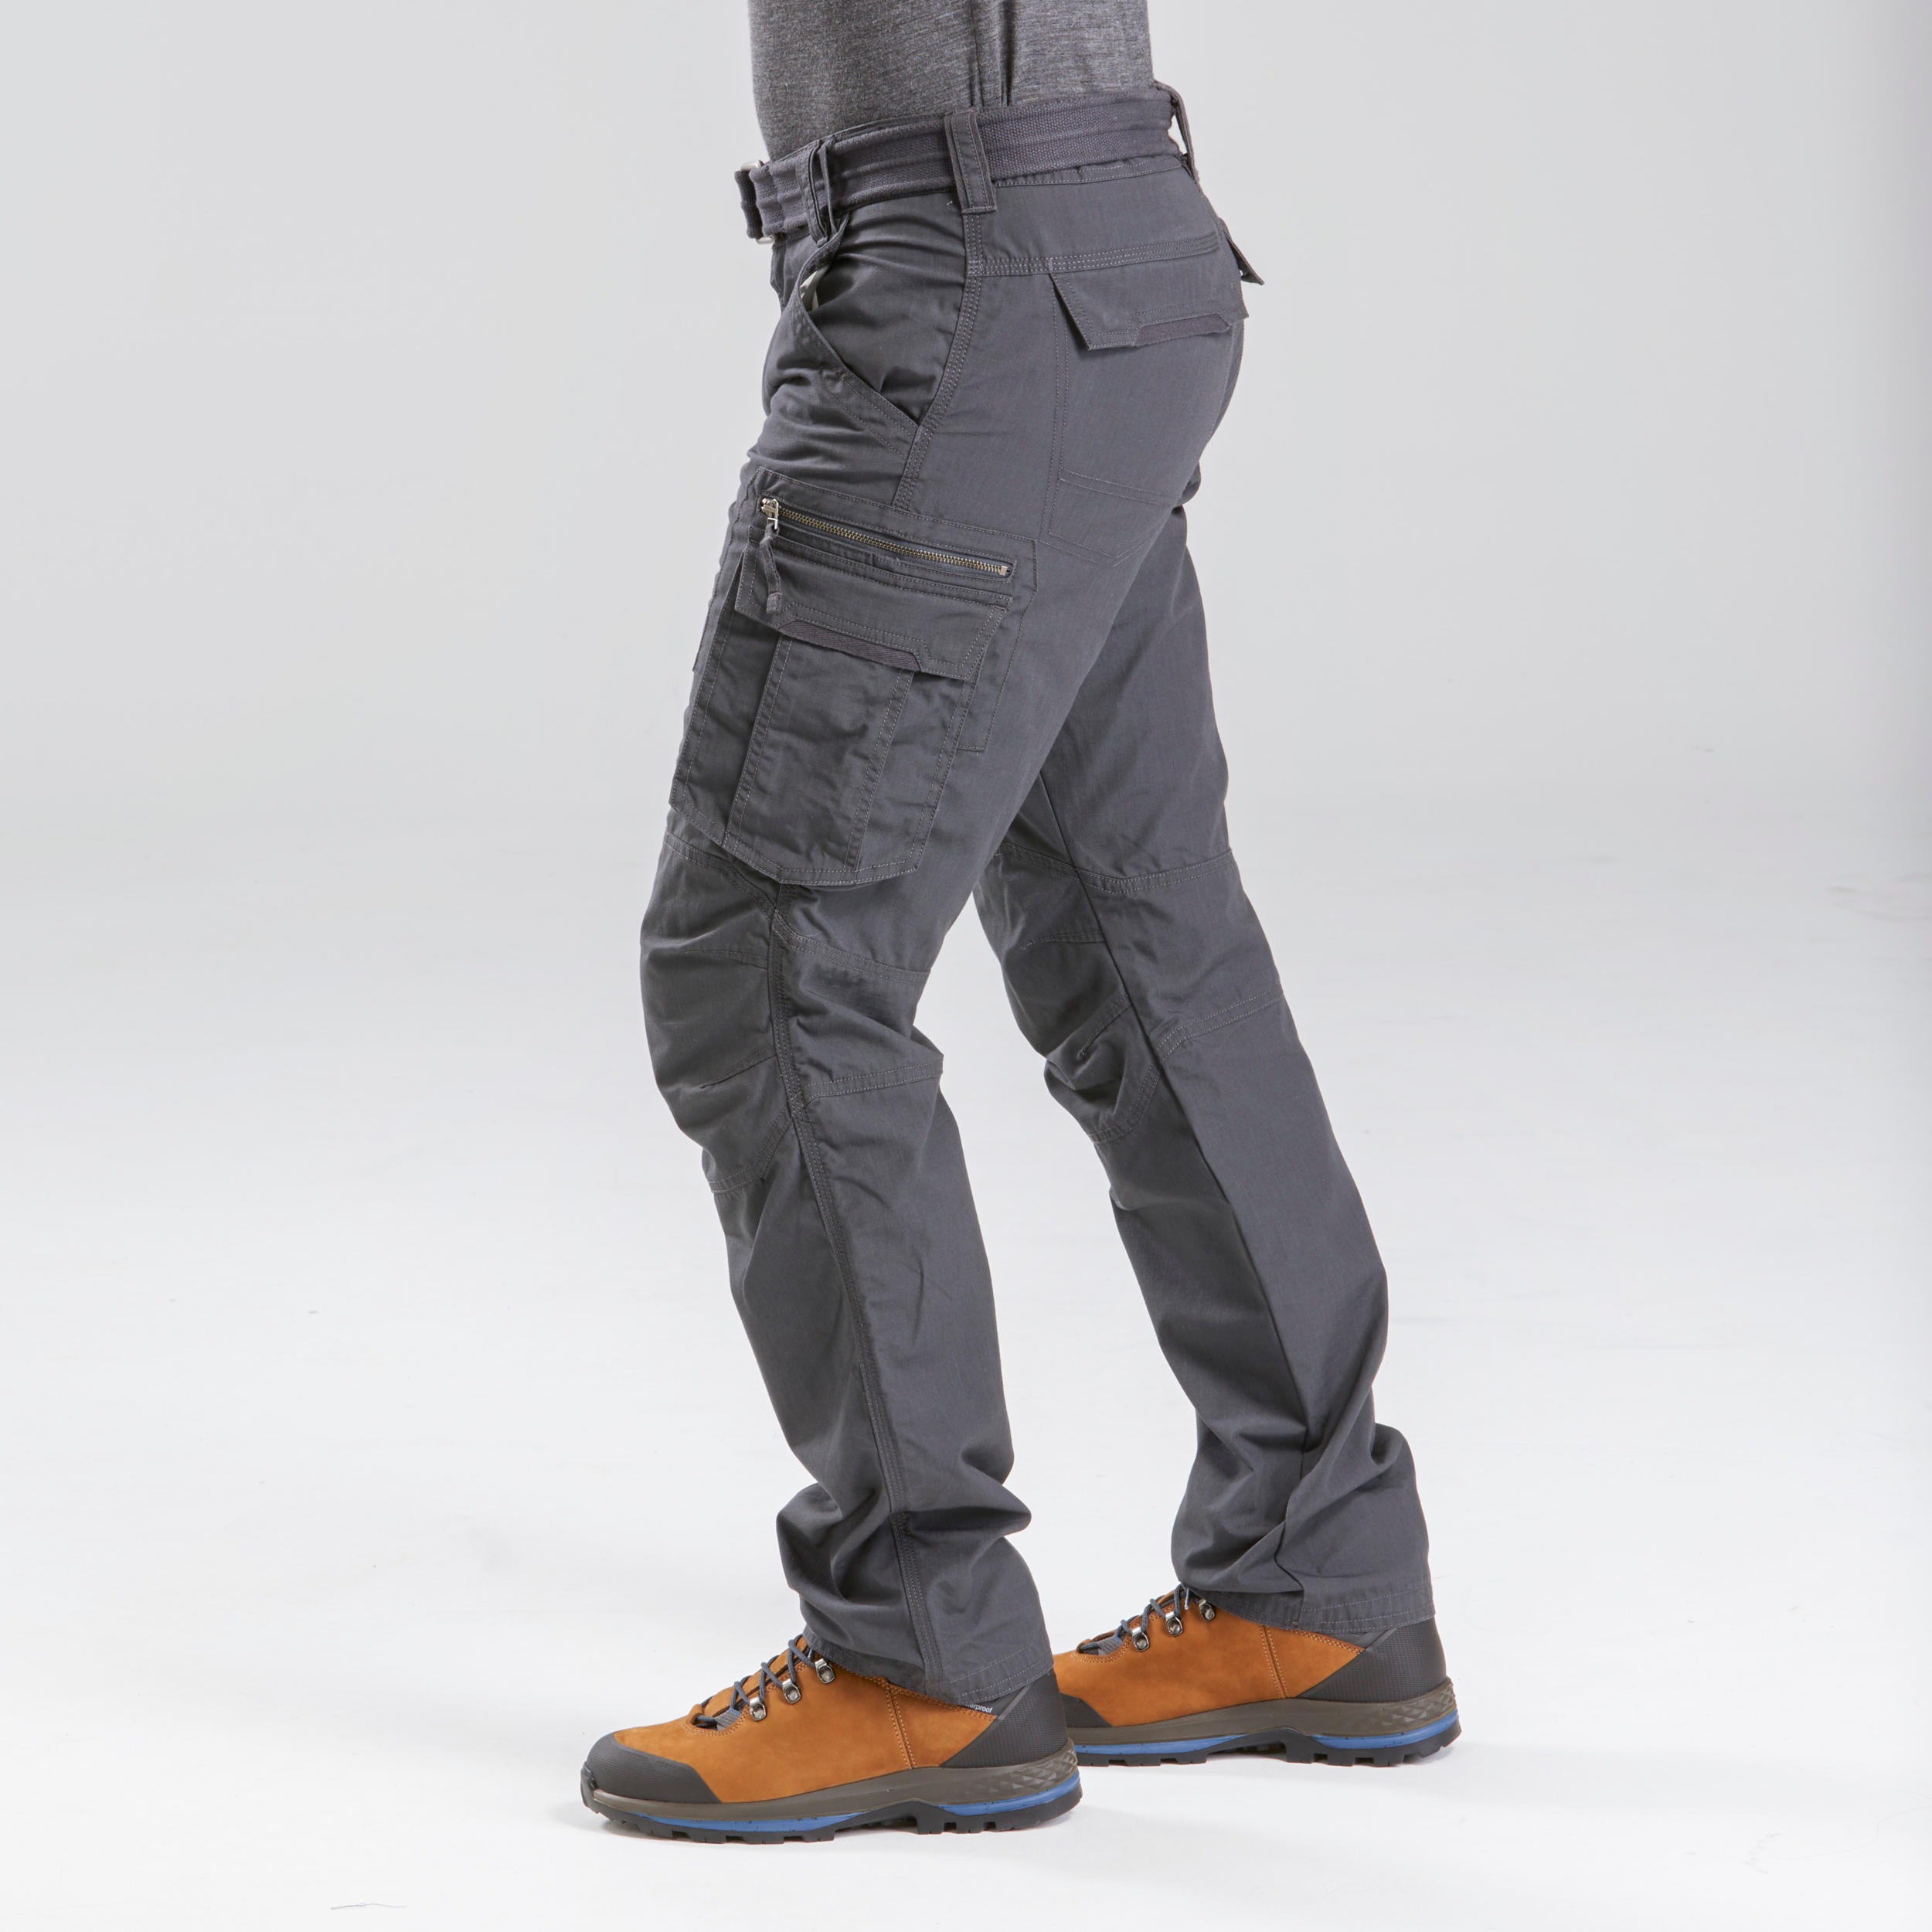 Buy Men Cargo Trousers Pants SG-300 - Grey at Amazon.in-hkpdtq2012.edu.vn